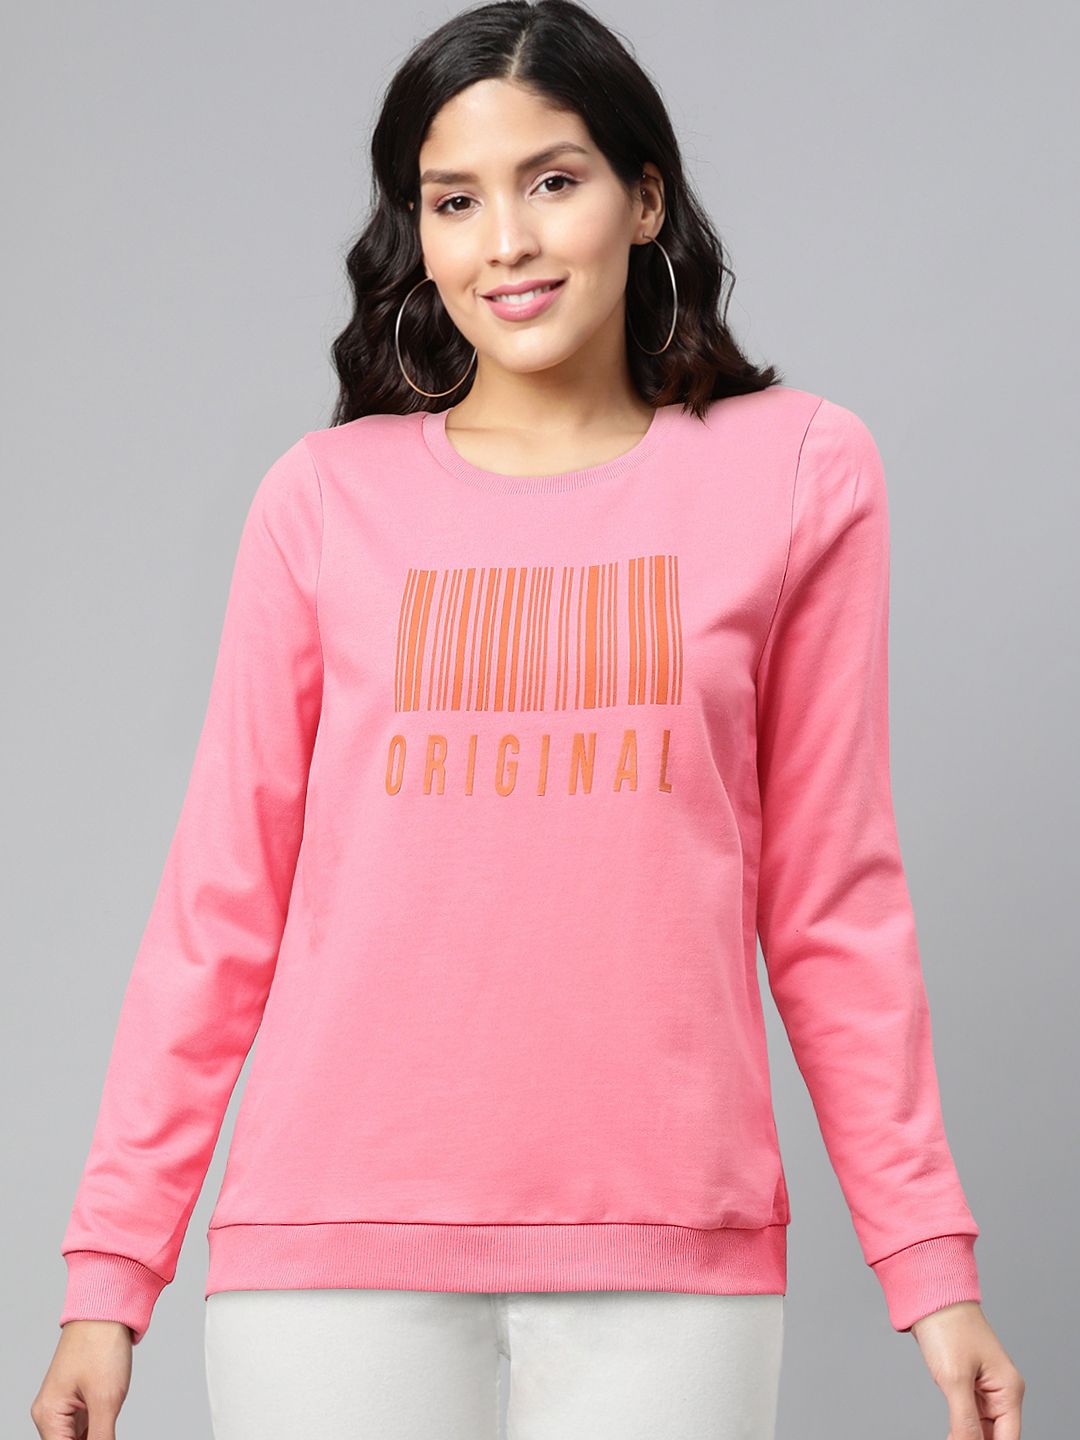 Vero Moda Women Pink & Brown Printed Sweatshirt Price in India